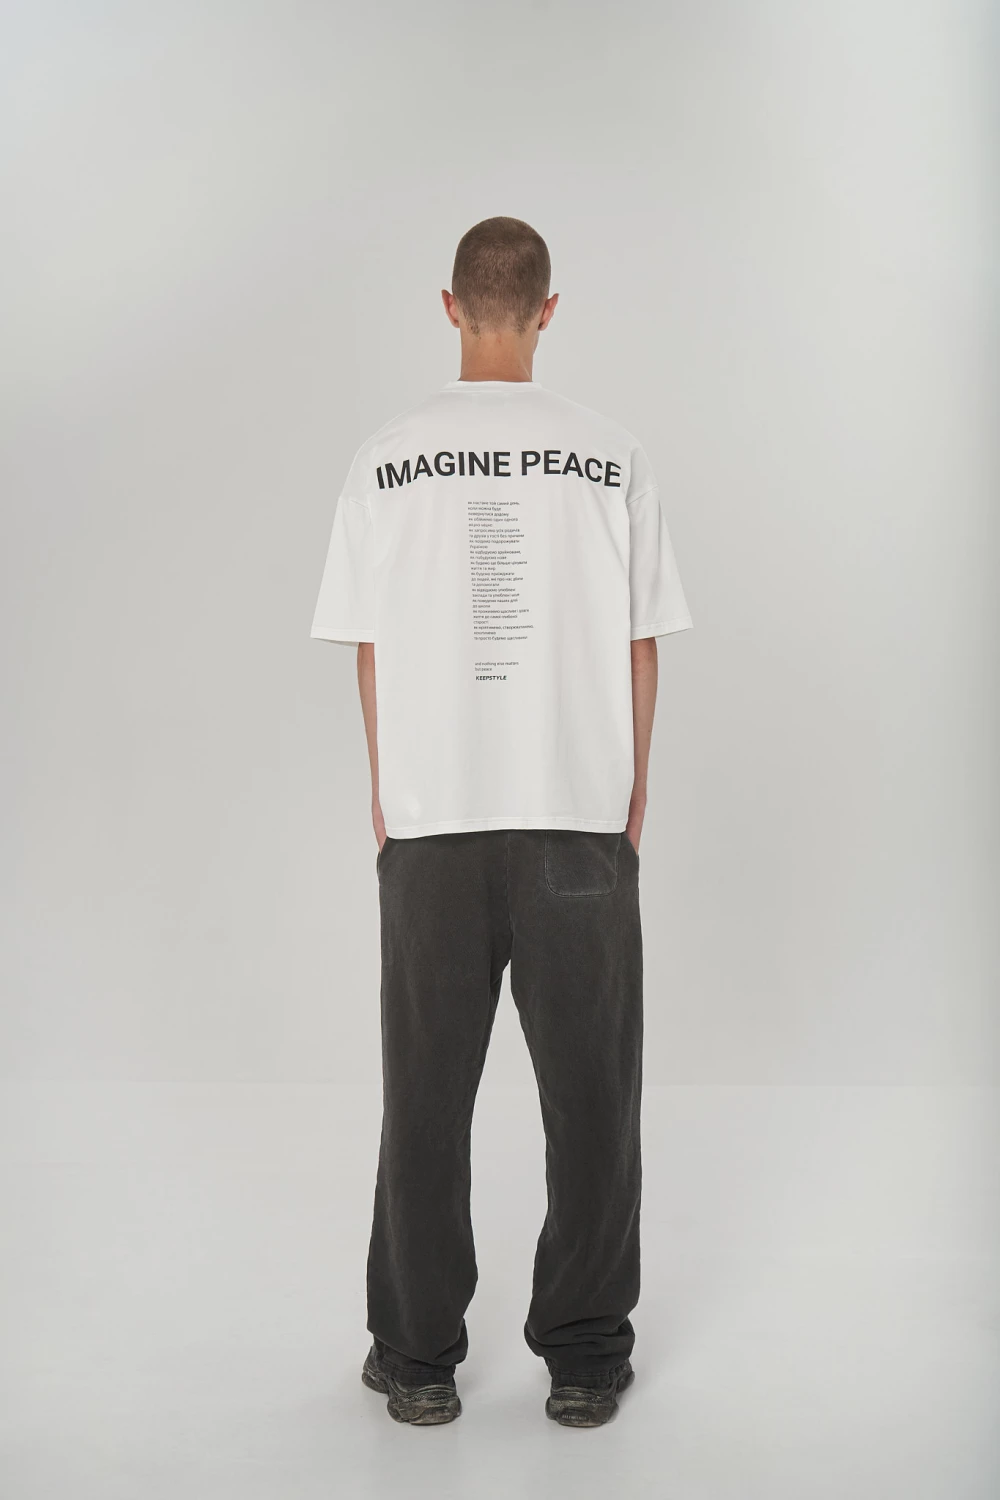 t-shirt "imagine peace" in vanilla color